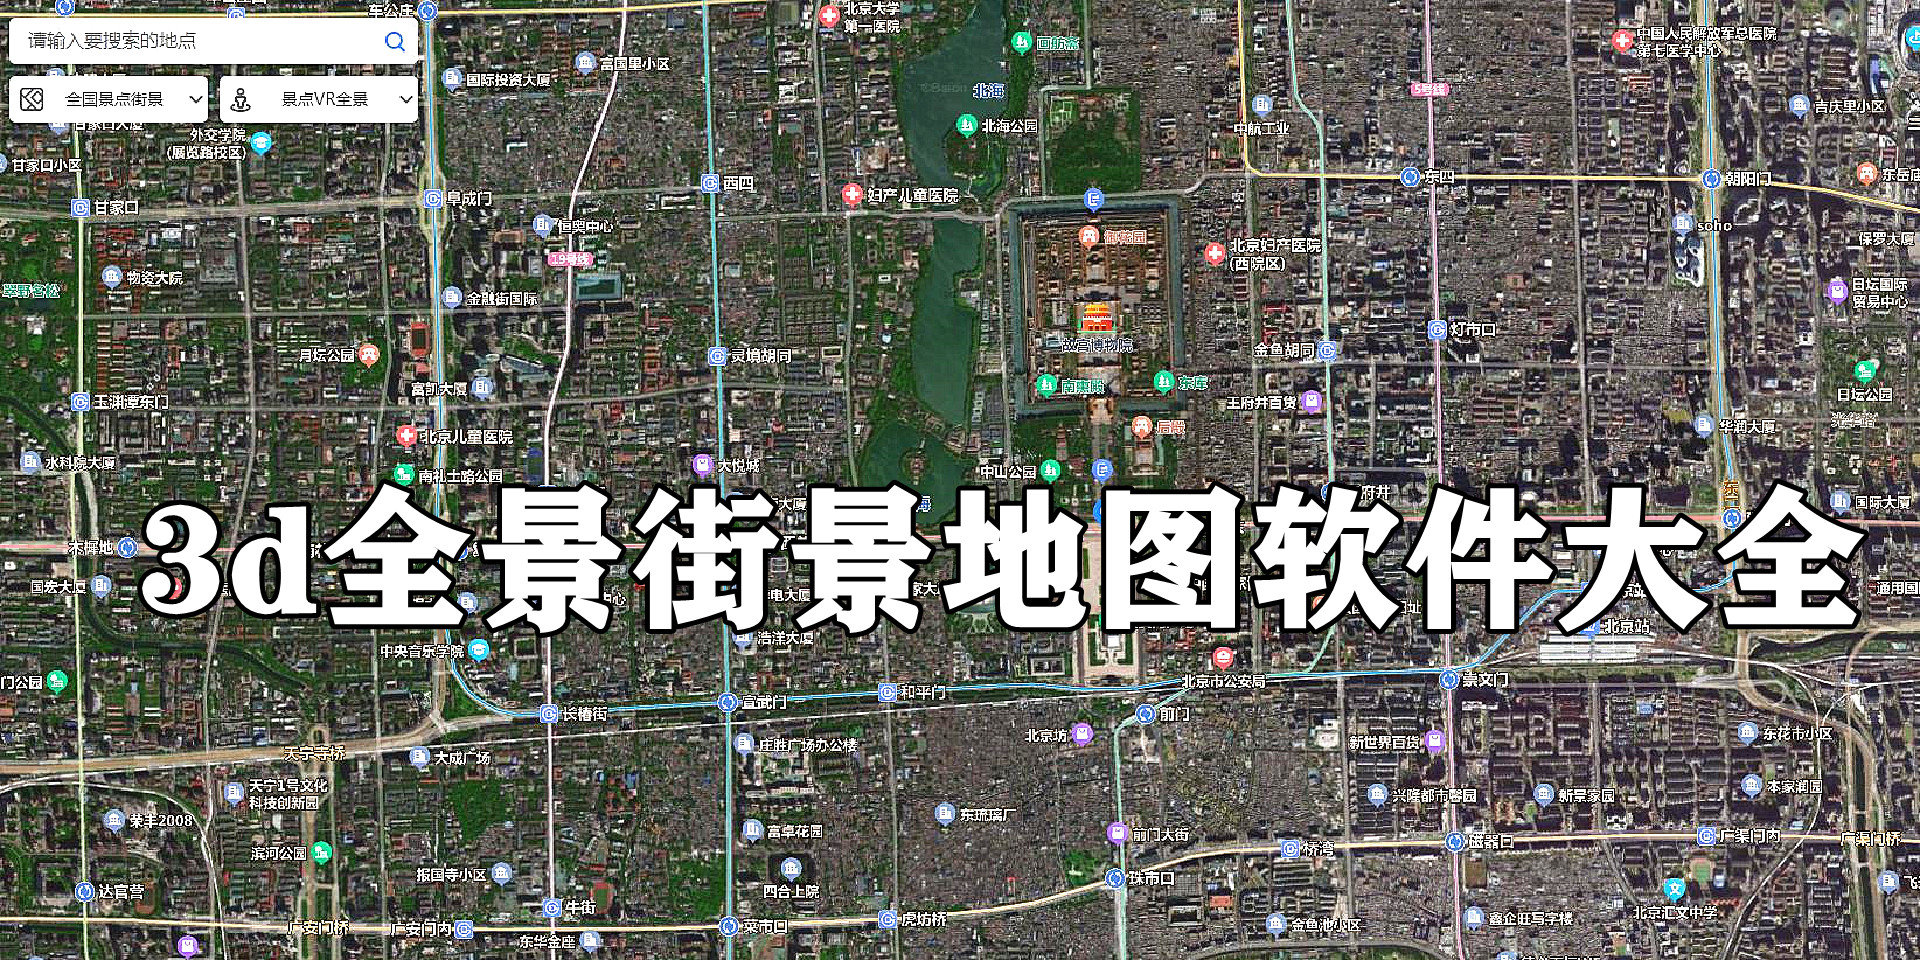 3d全景街景地图软件大全